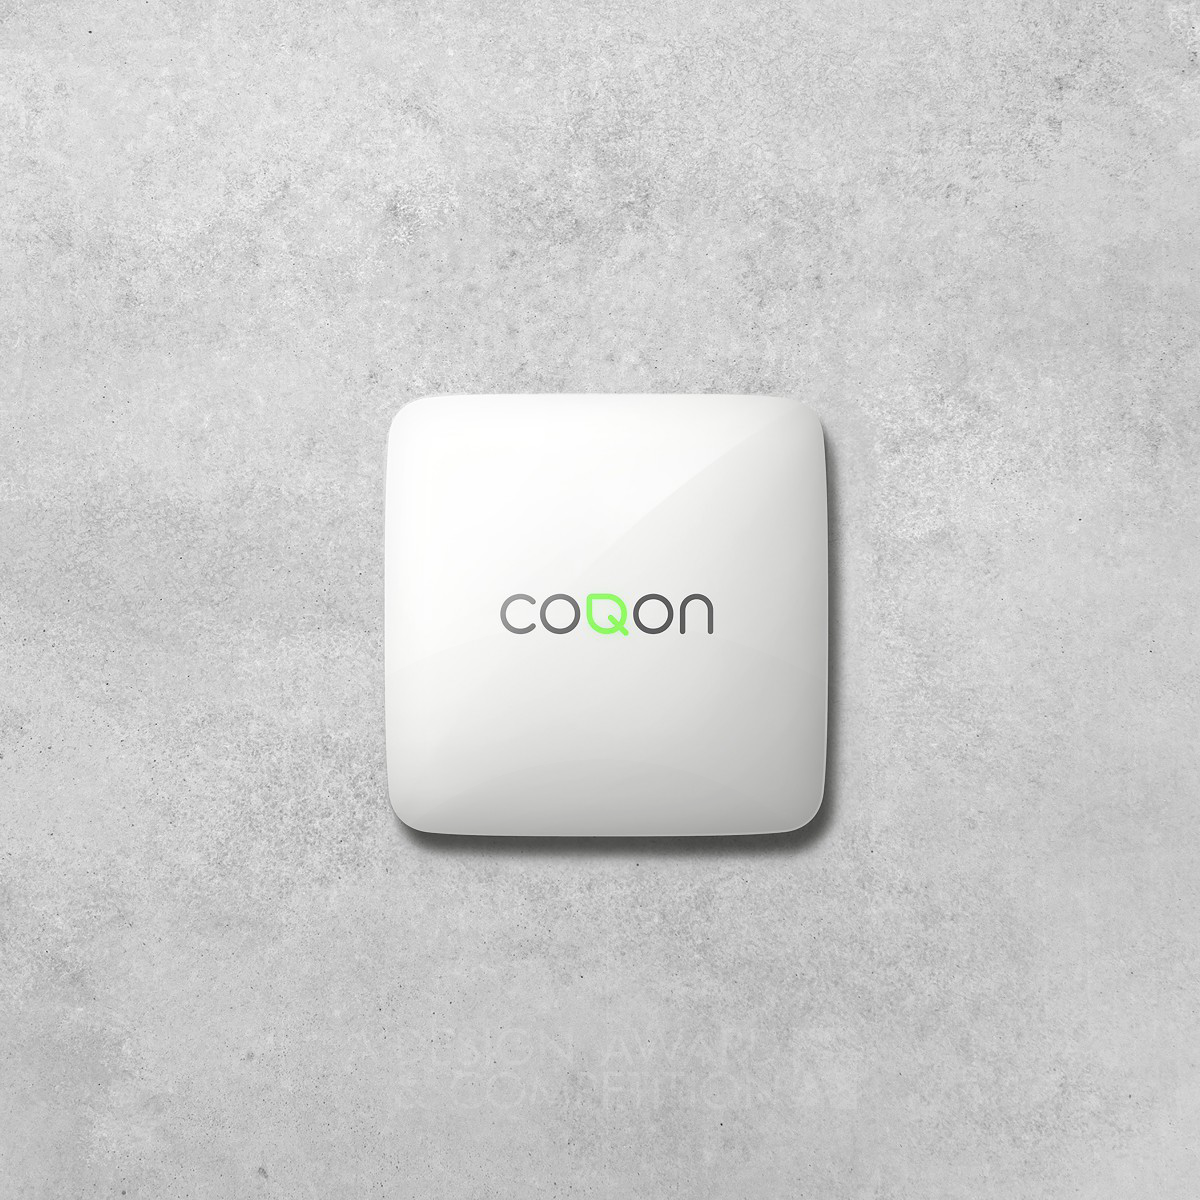 COQON Product by Peter Schmidt, Belliero & Zandée Gmbh